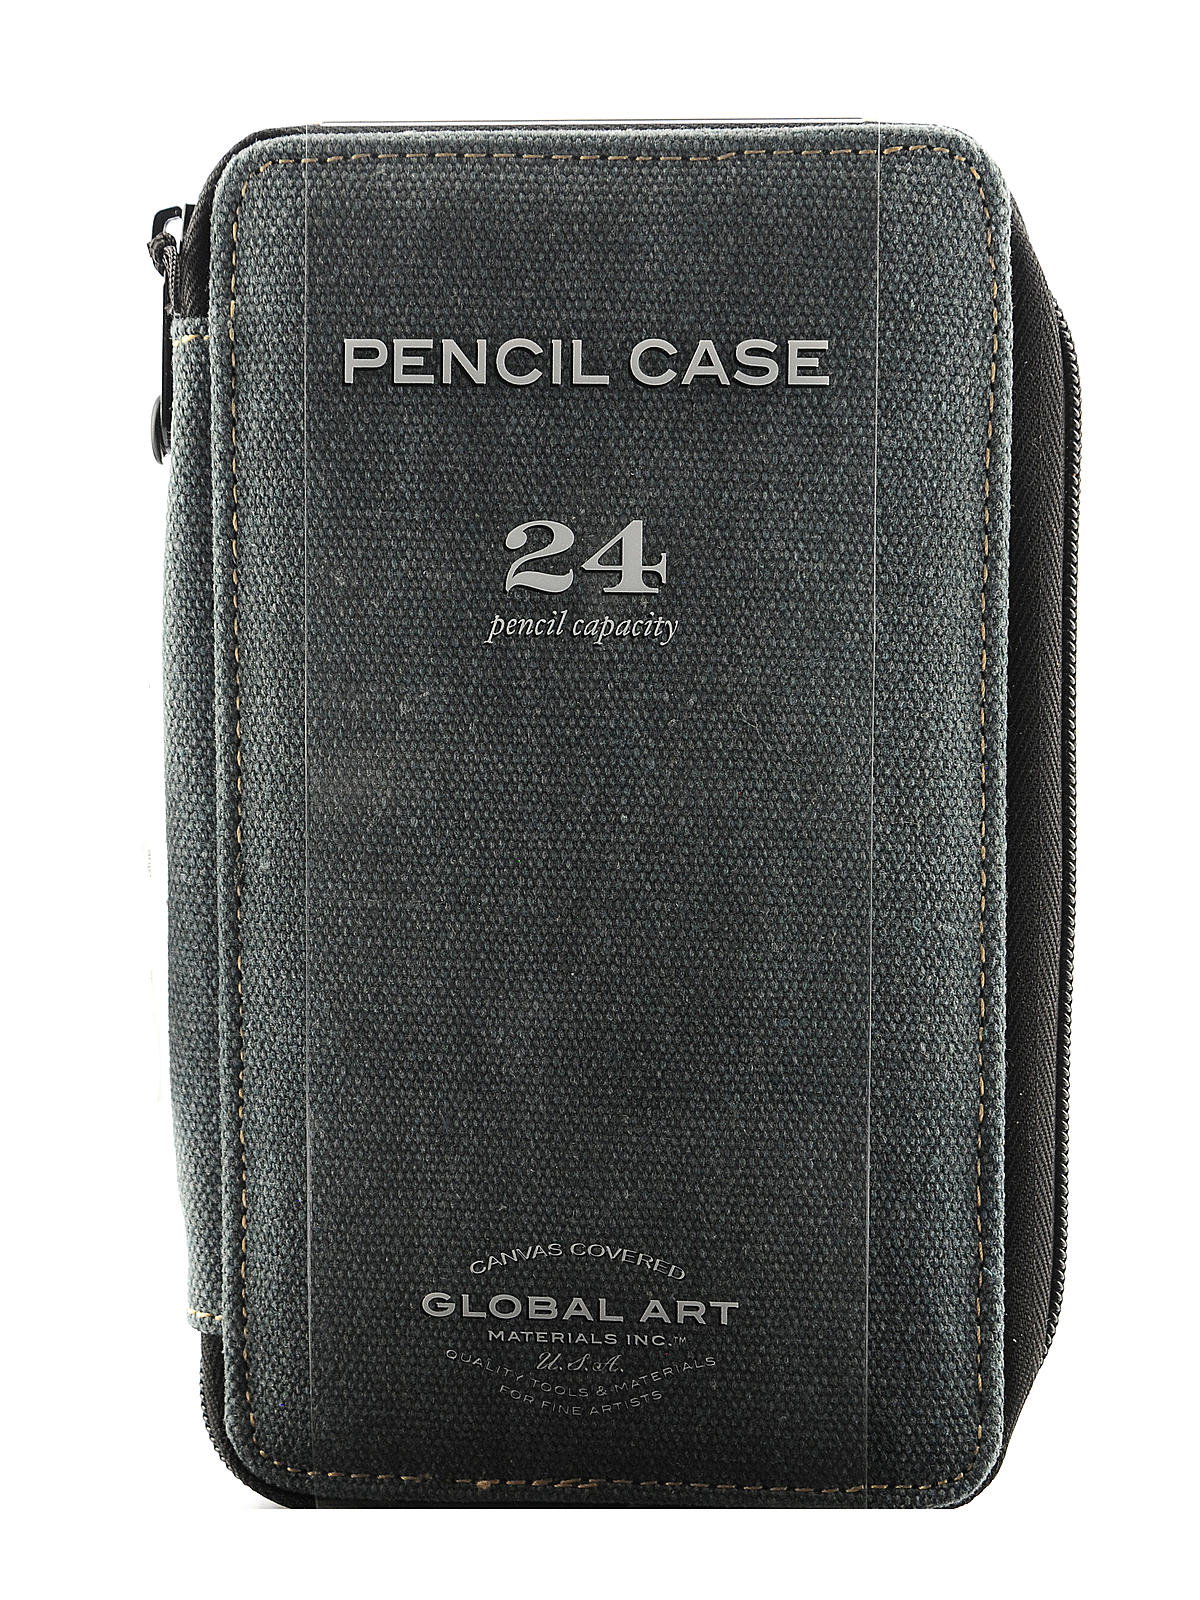 Global Art Pencil Case, Woven Canvas, Sage, 48 Pencils - The Art